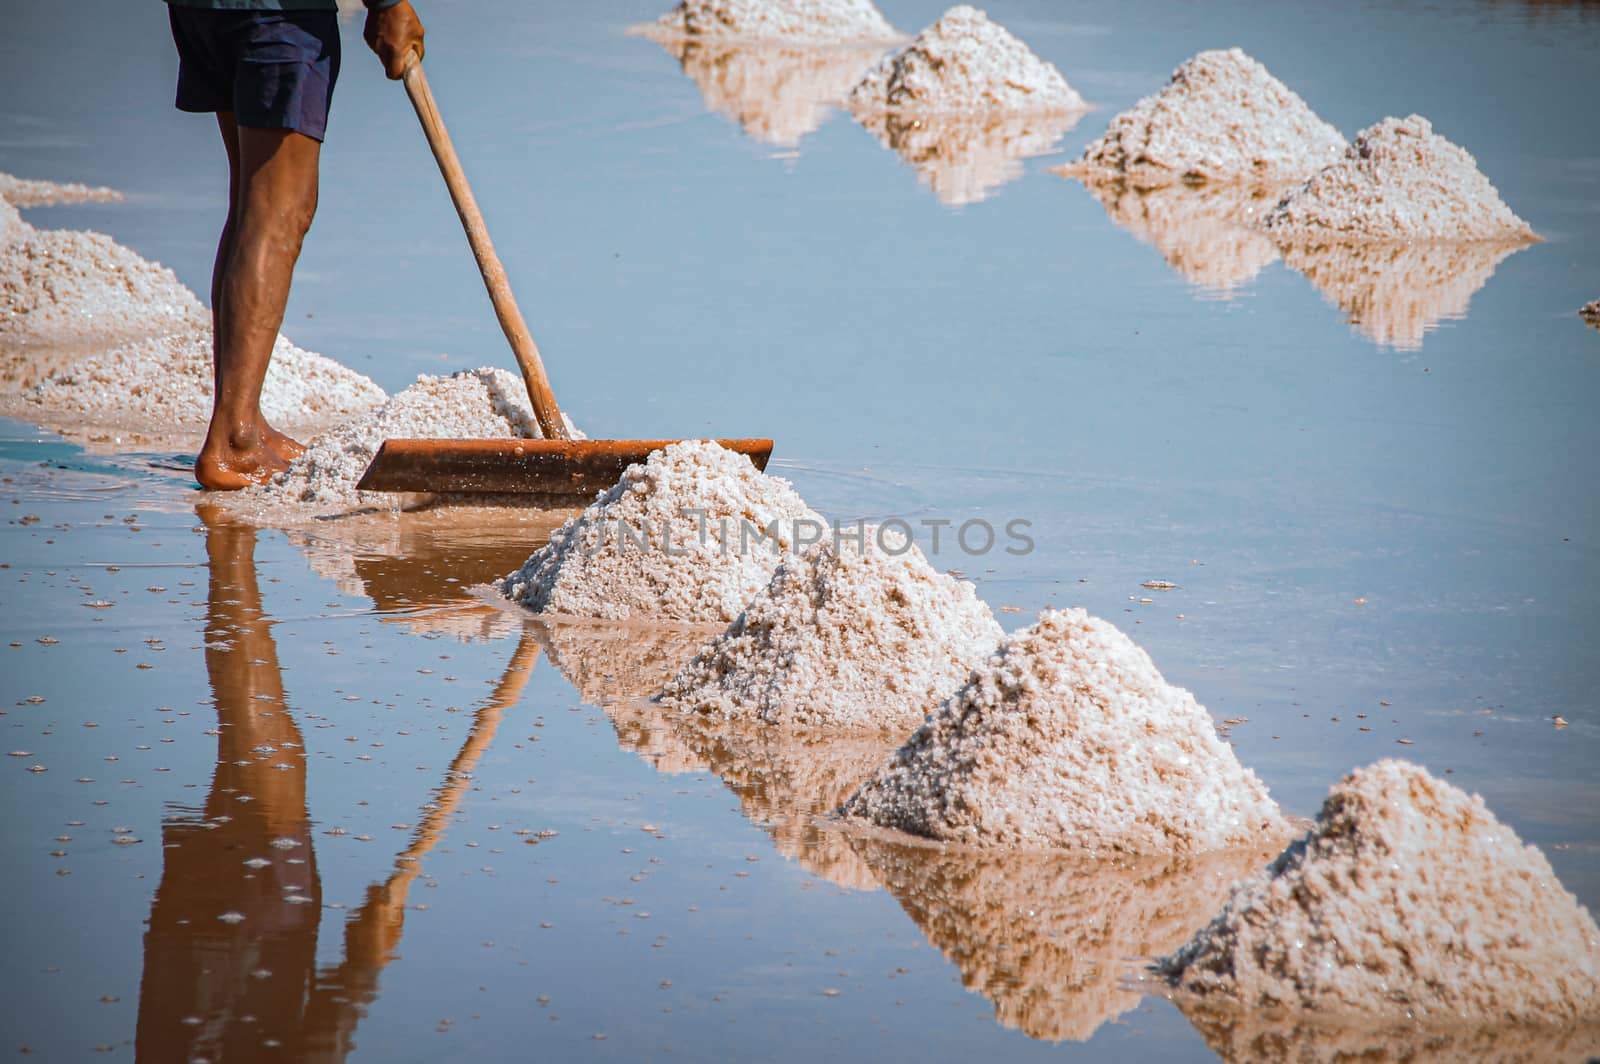 Harvesting Sea salt in Kampot by Sonnet15